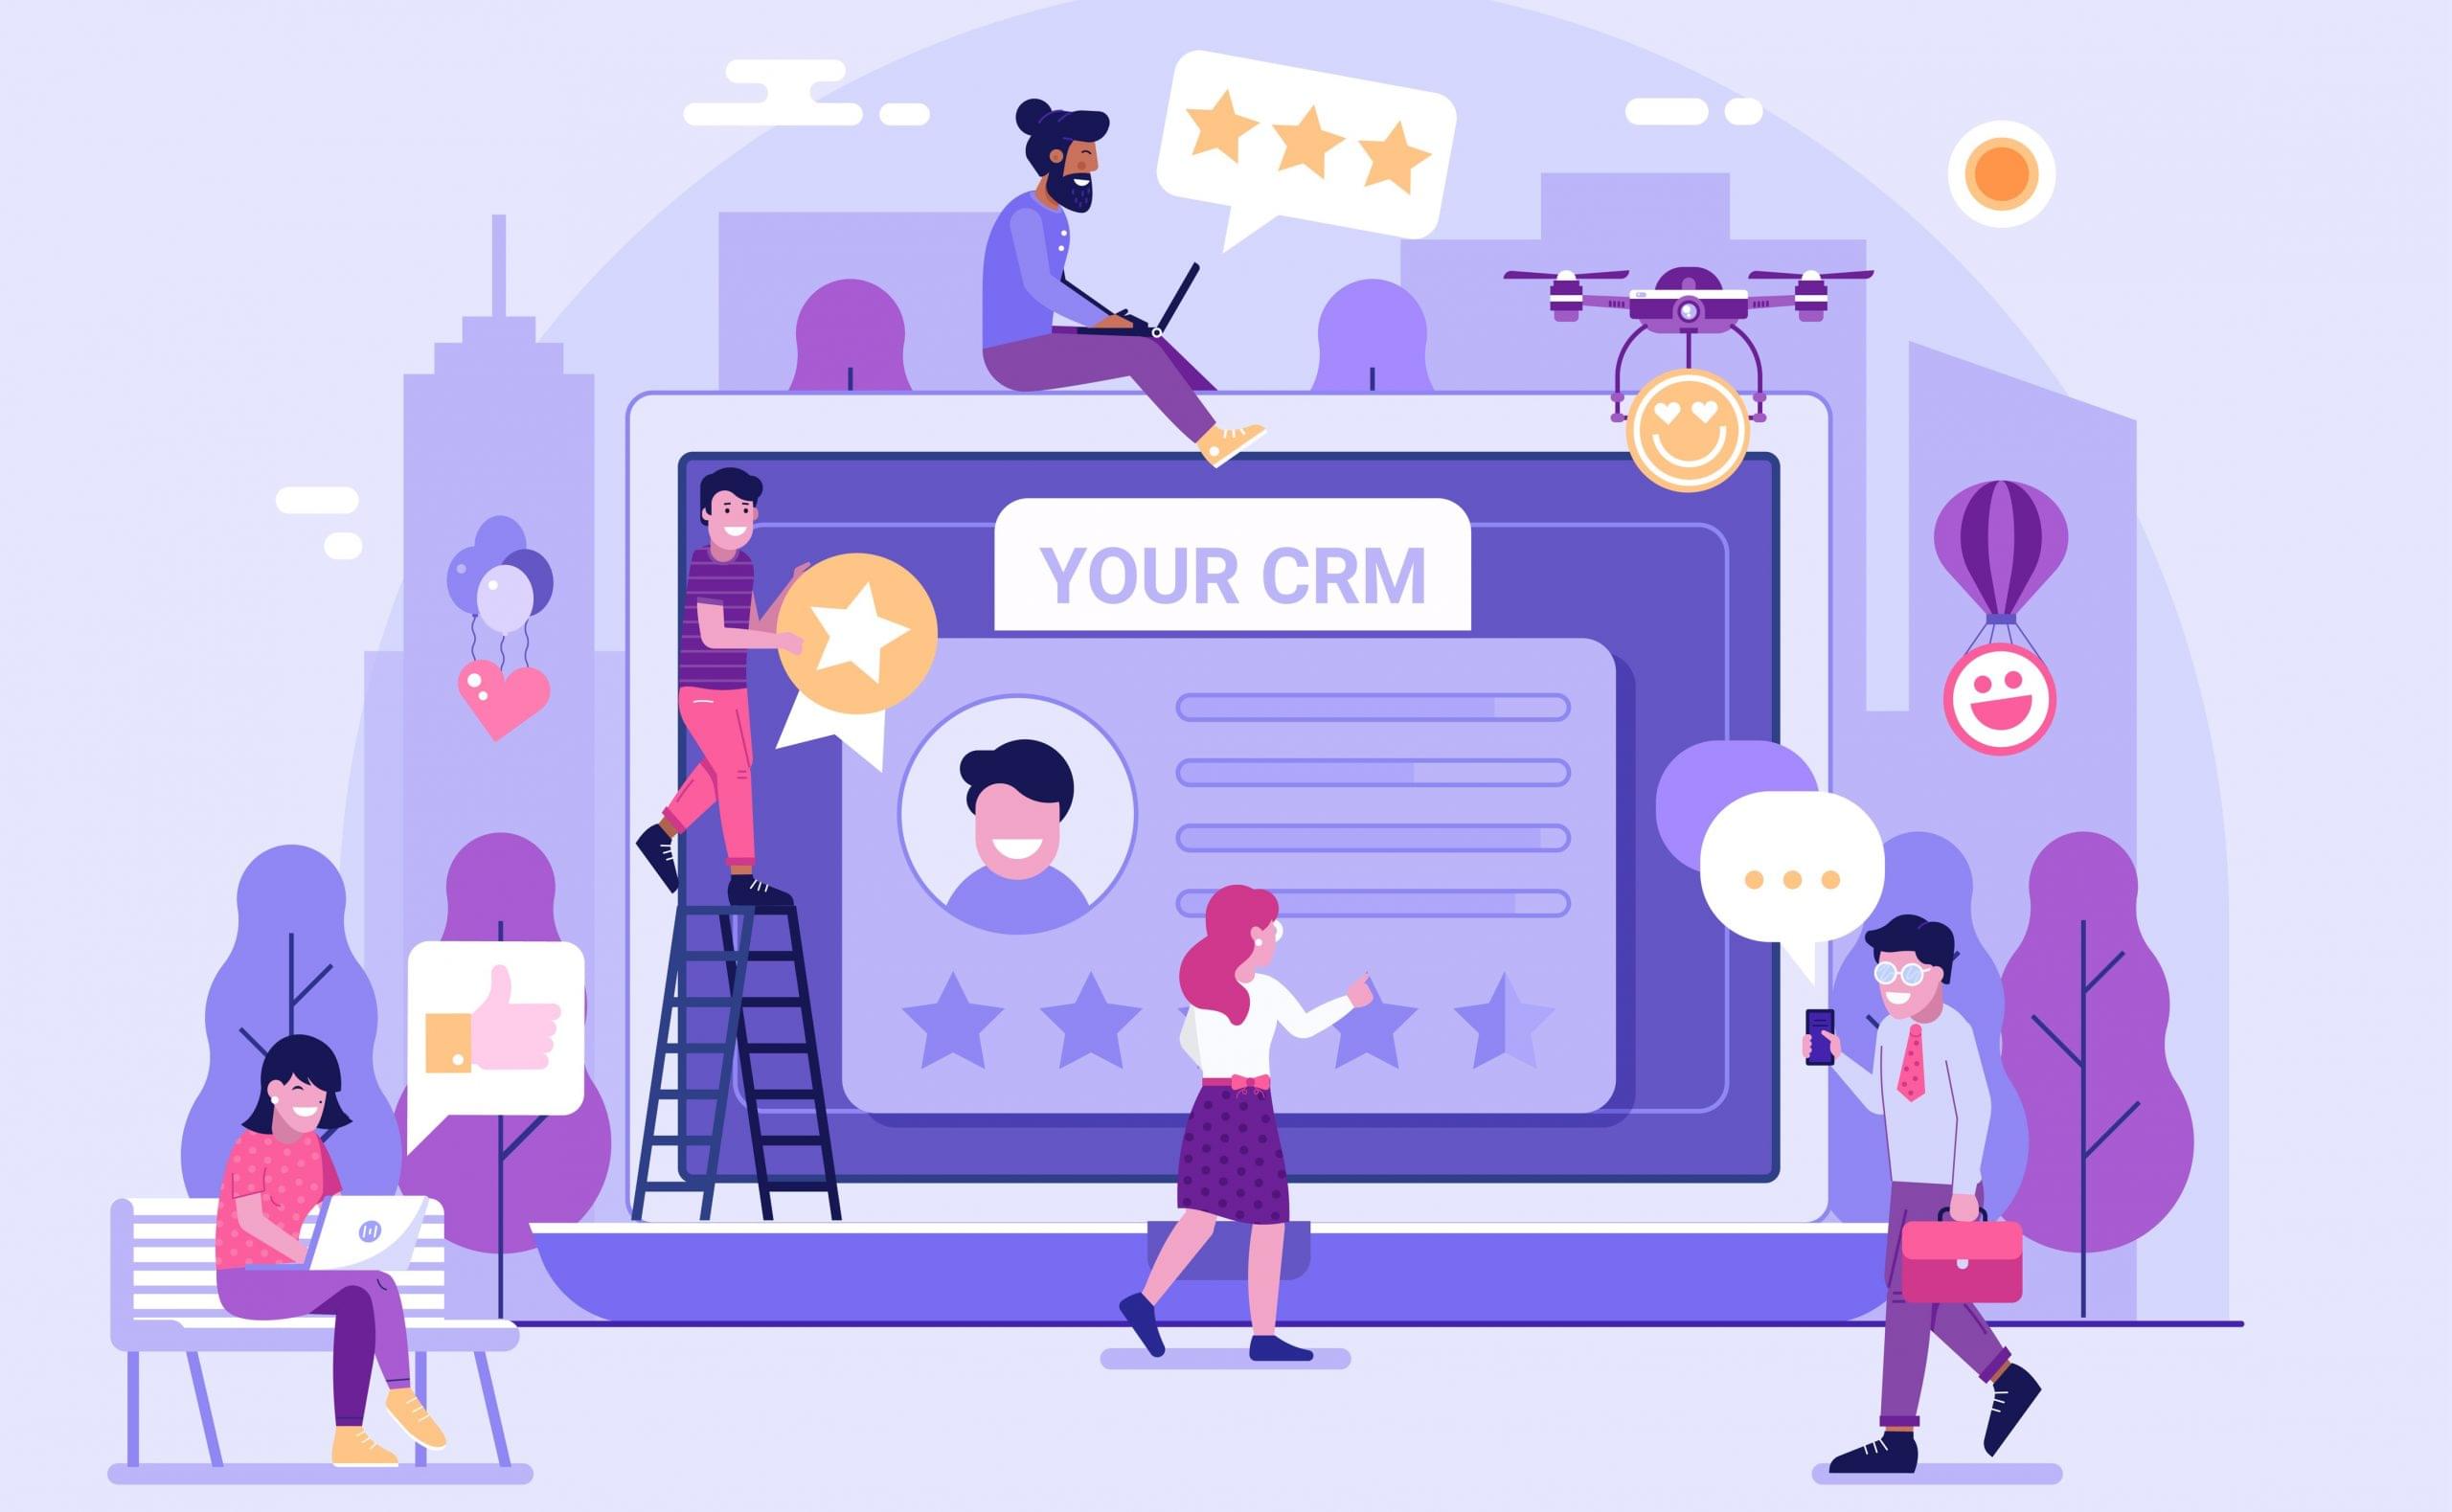 Customer relationship management platform concept with happy clients leaving positive feedback. Illustration.